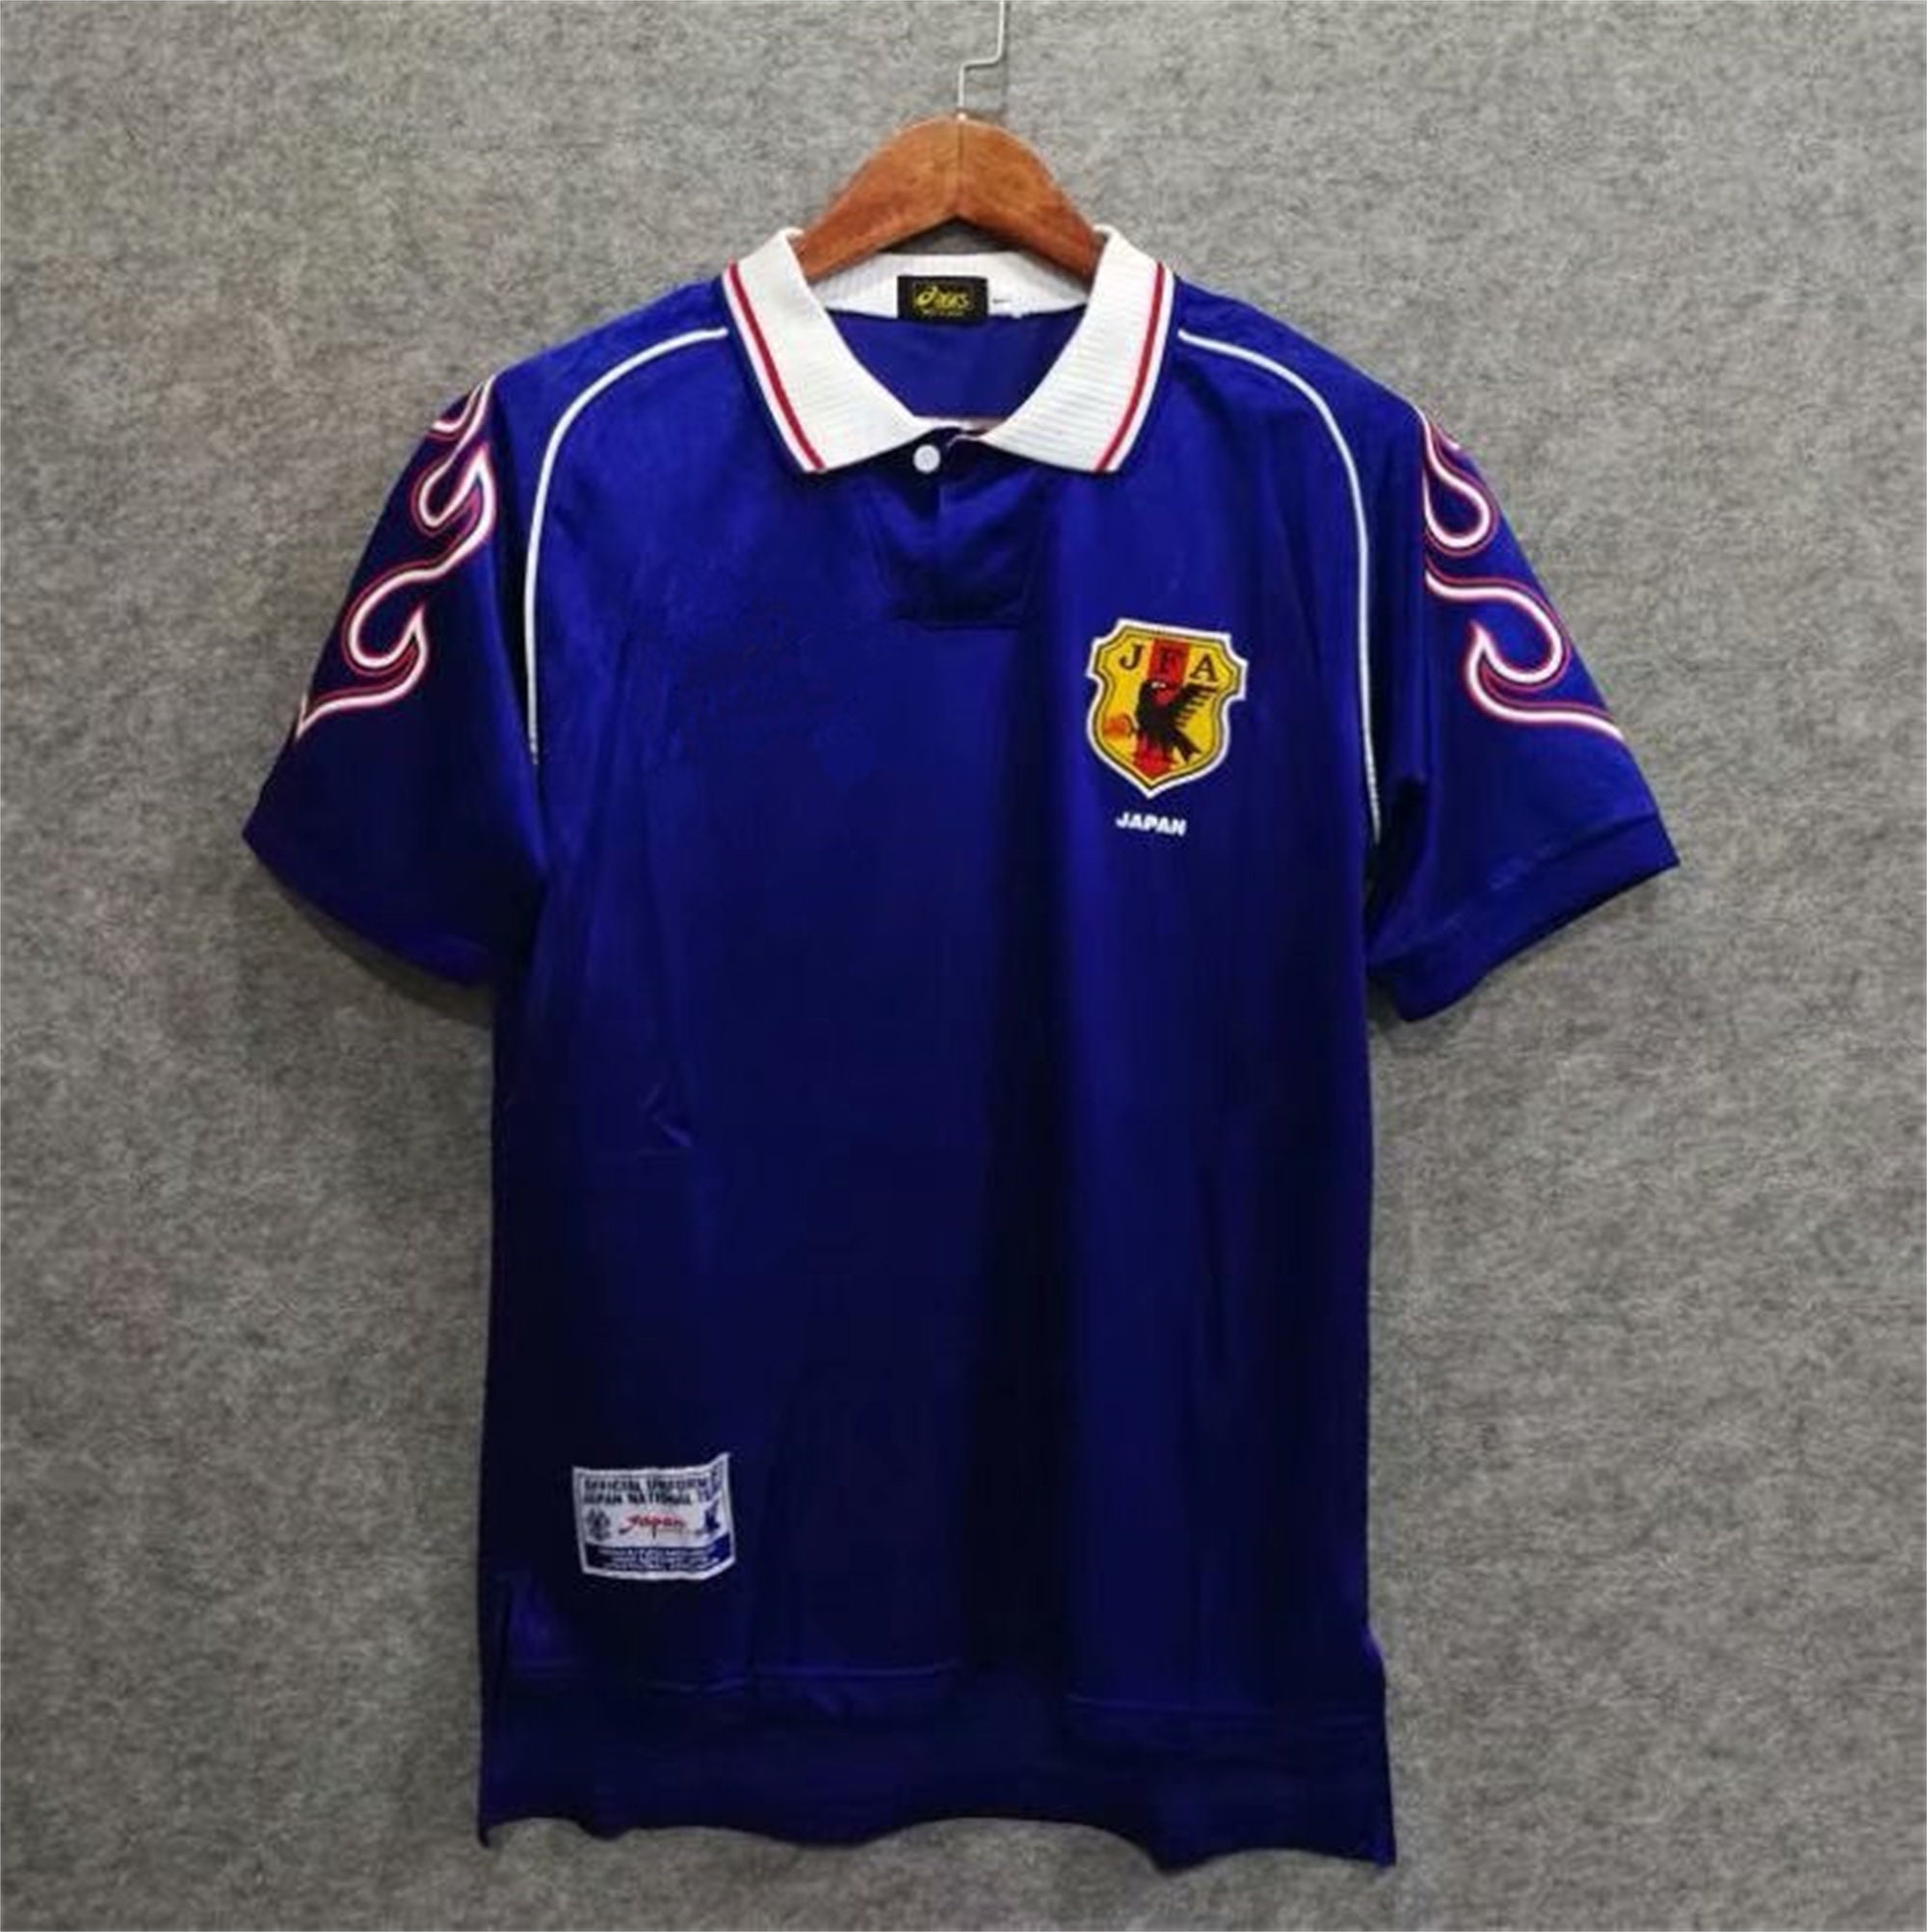 Japan Soccer Jersey Shirt size M or L Original Official 1998 World Cup 0625  M